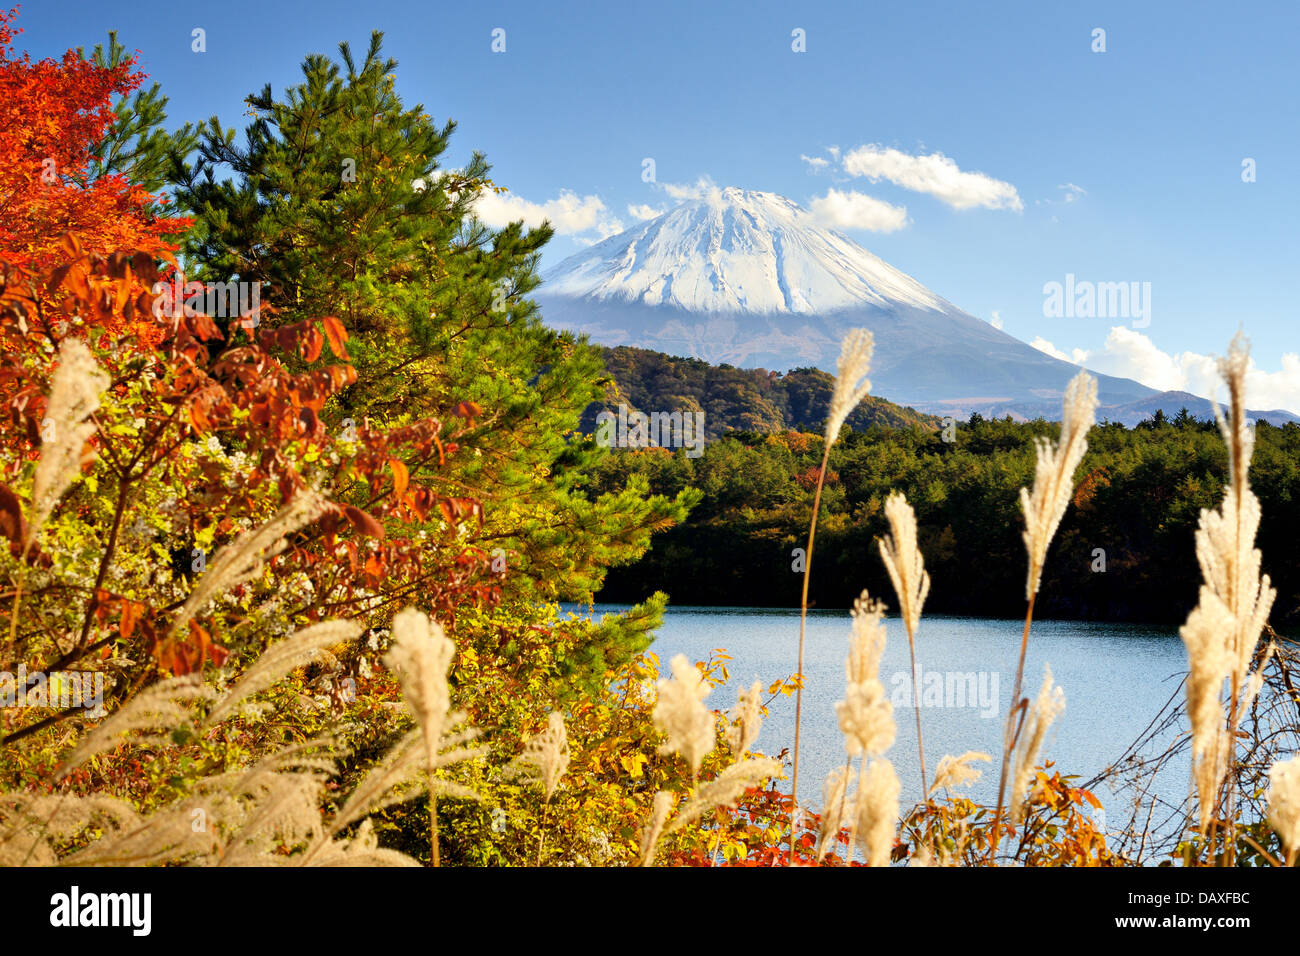 Mt. Fuji and autumn foliage at Lake Saiko. Stock Photo